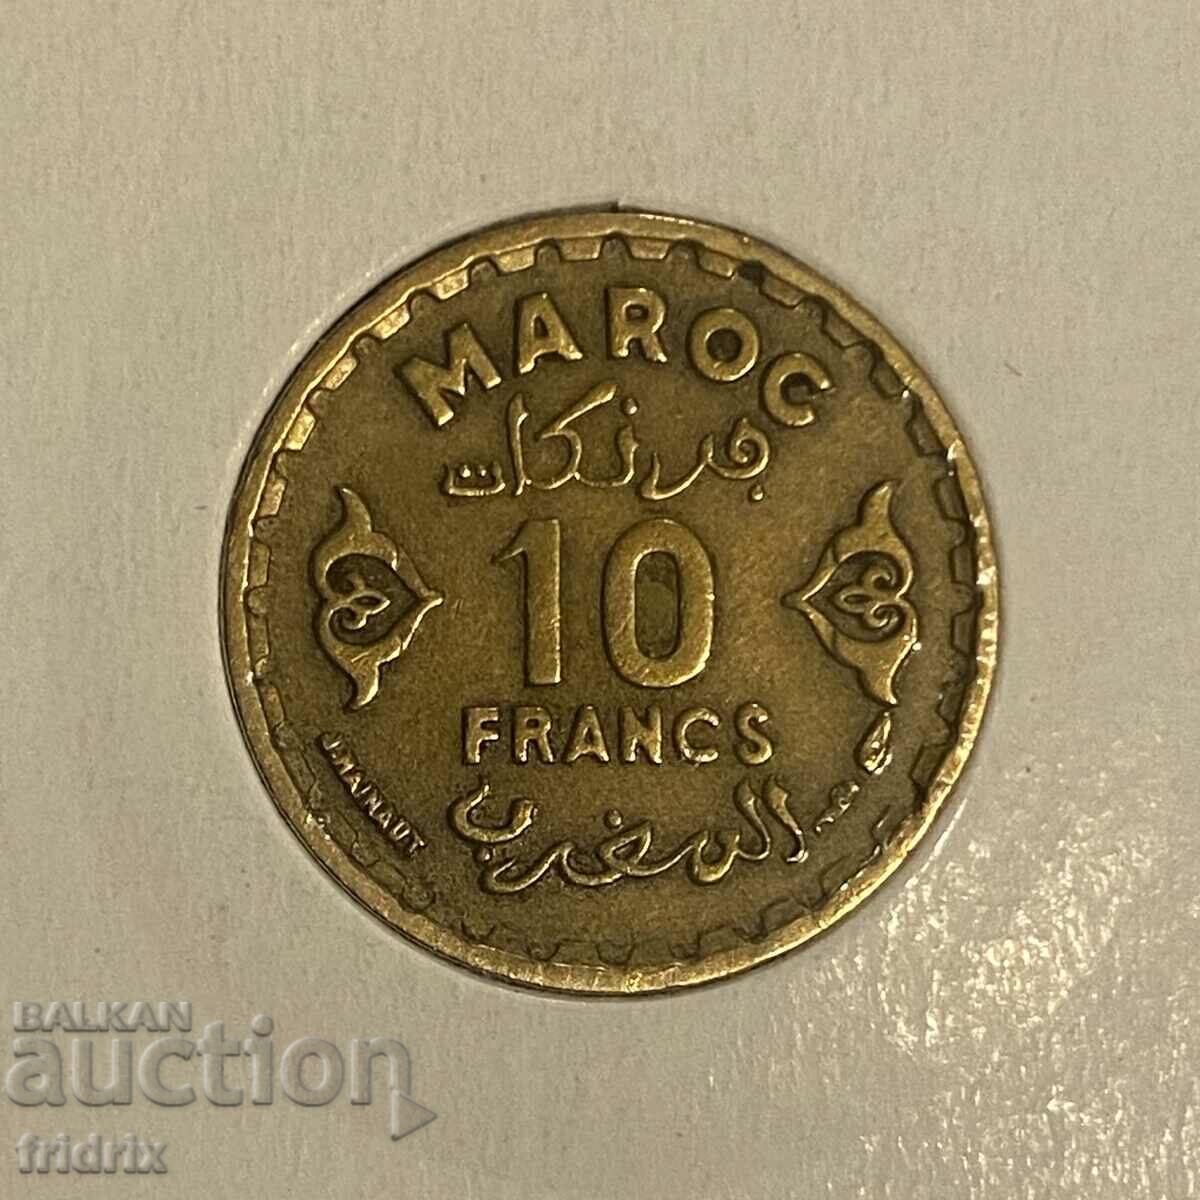 Maroc 10 franci / Maroc 10 franci 1952